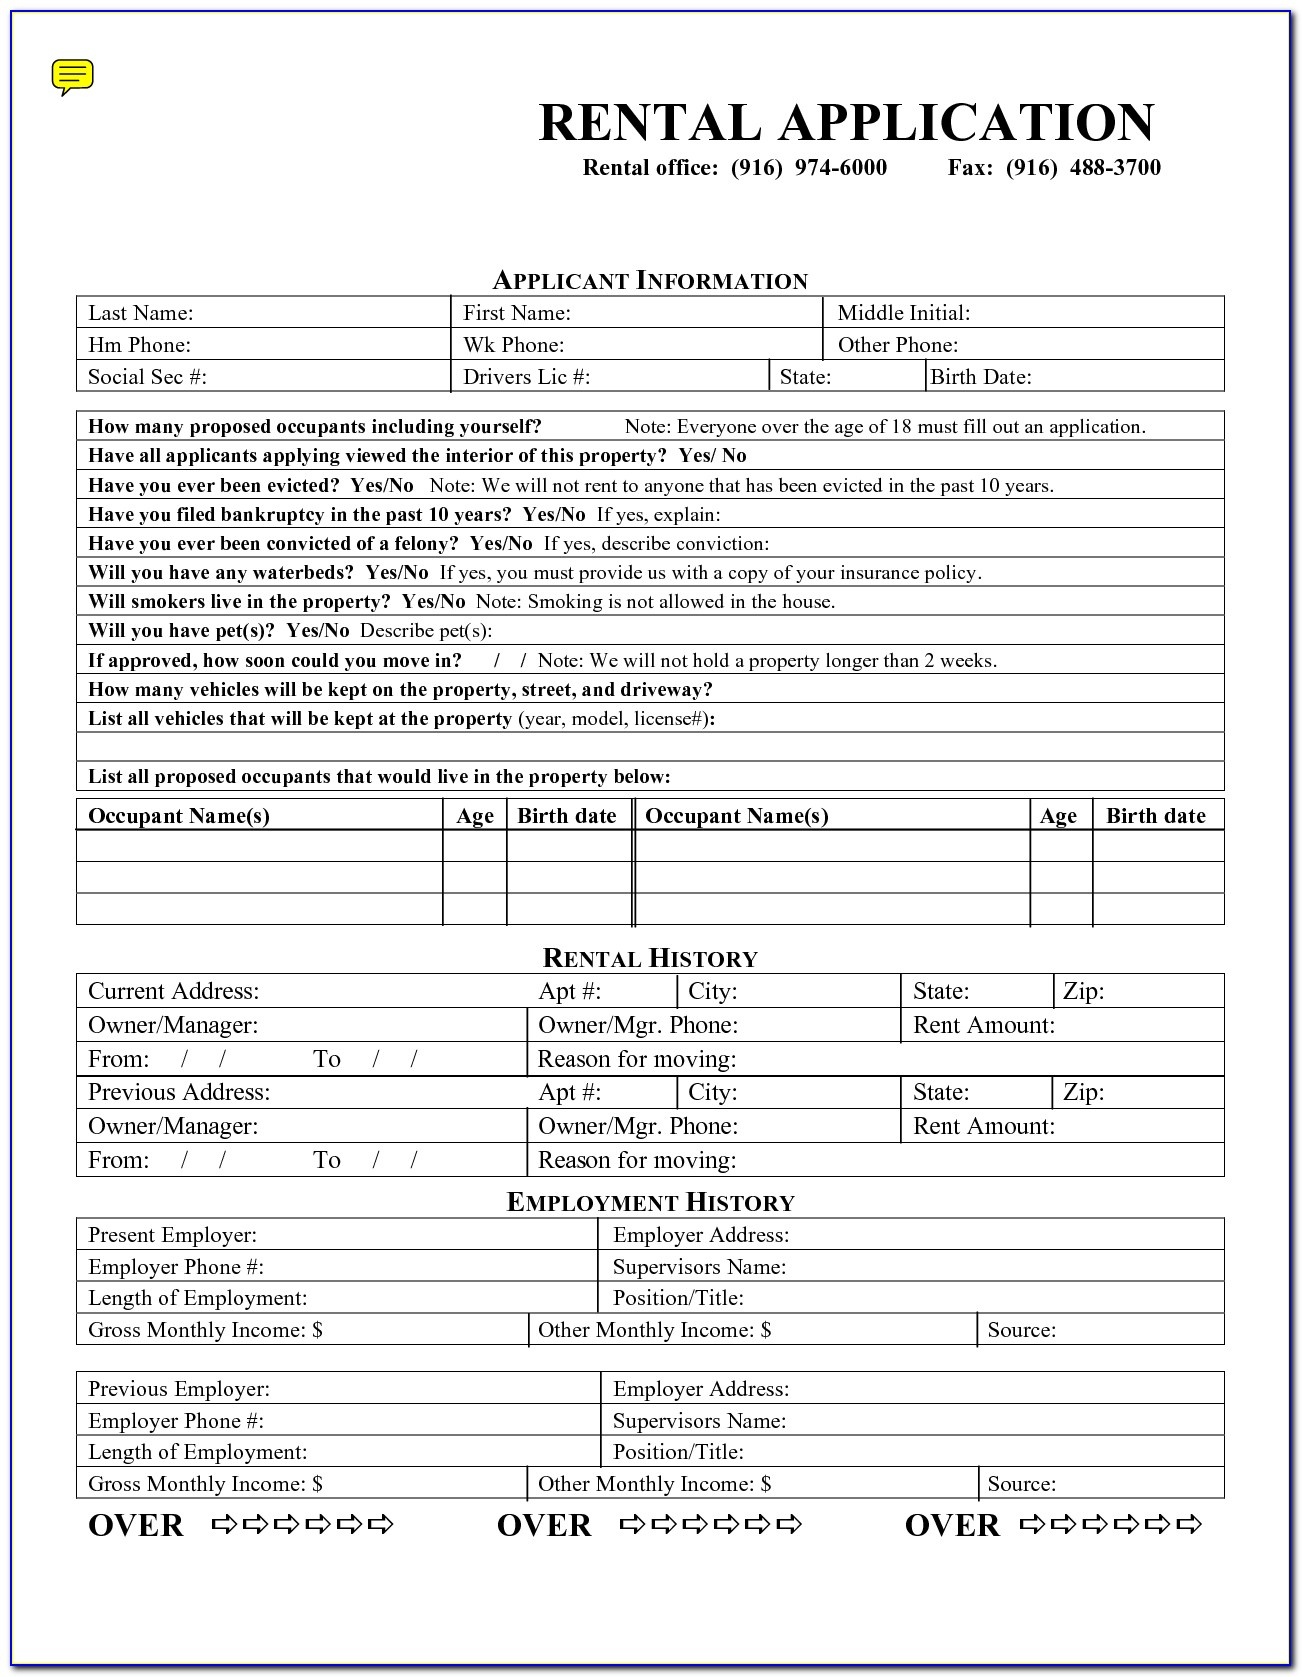 Rental Application Forms Free Printable - Form : Resume Examples - Free Printable House Rental Application Form